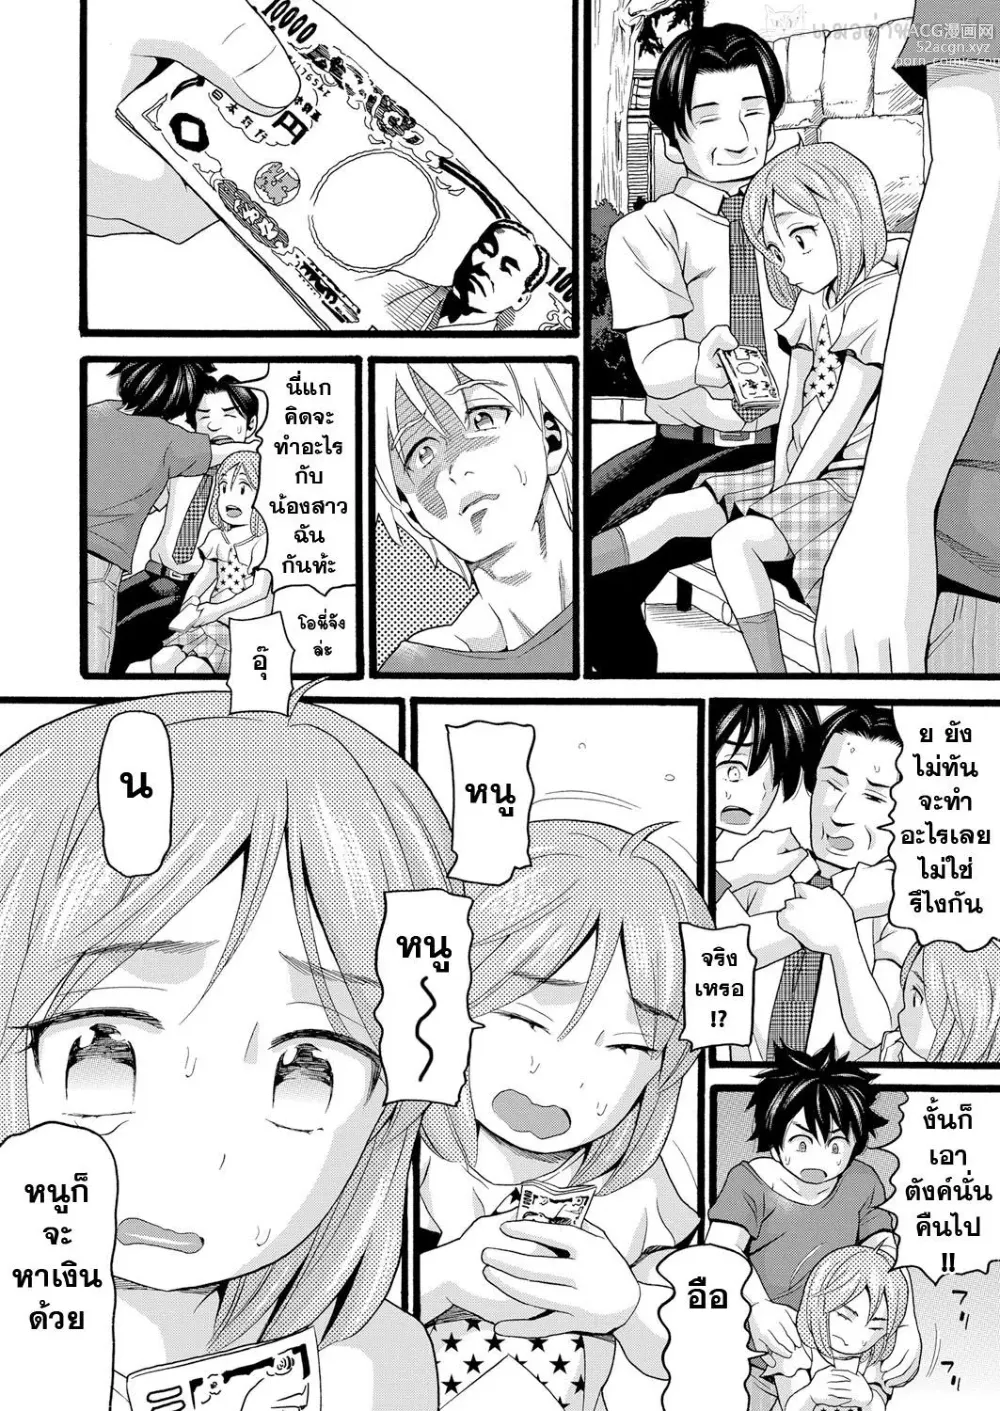 Page 185 of manga Yurui Ko